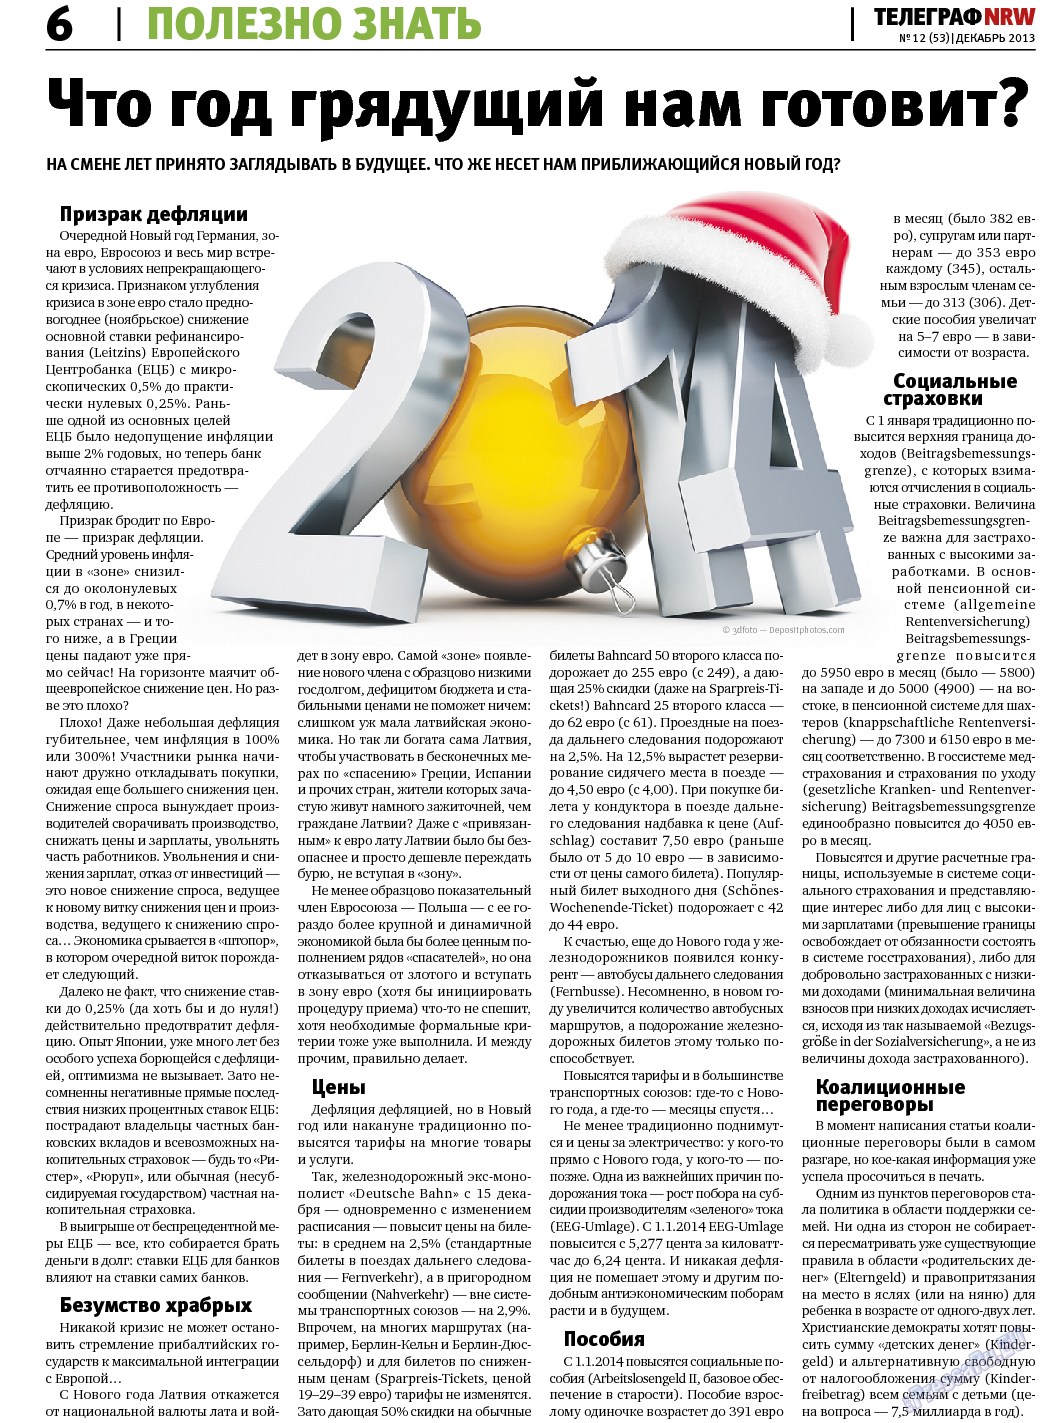 Телеграф NRW, газета. 2013 №12 стр.6